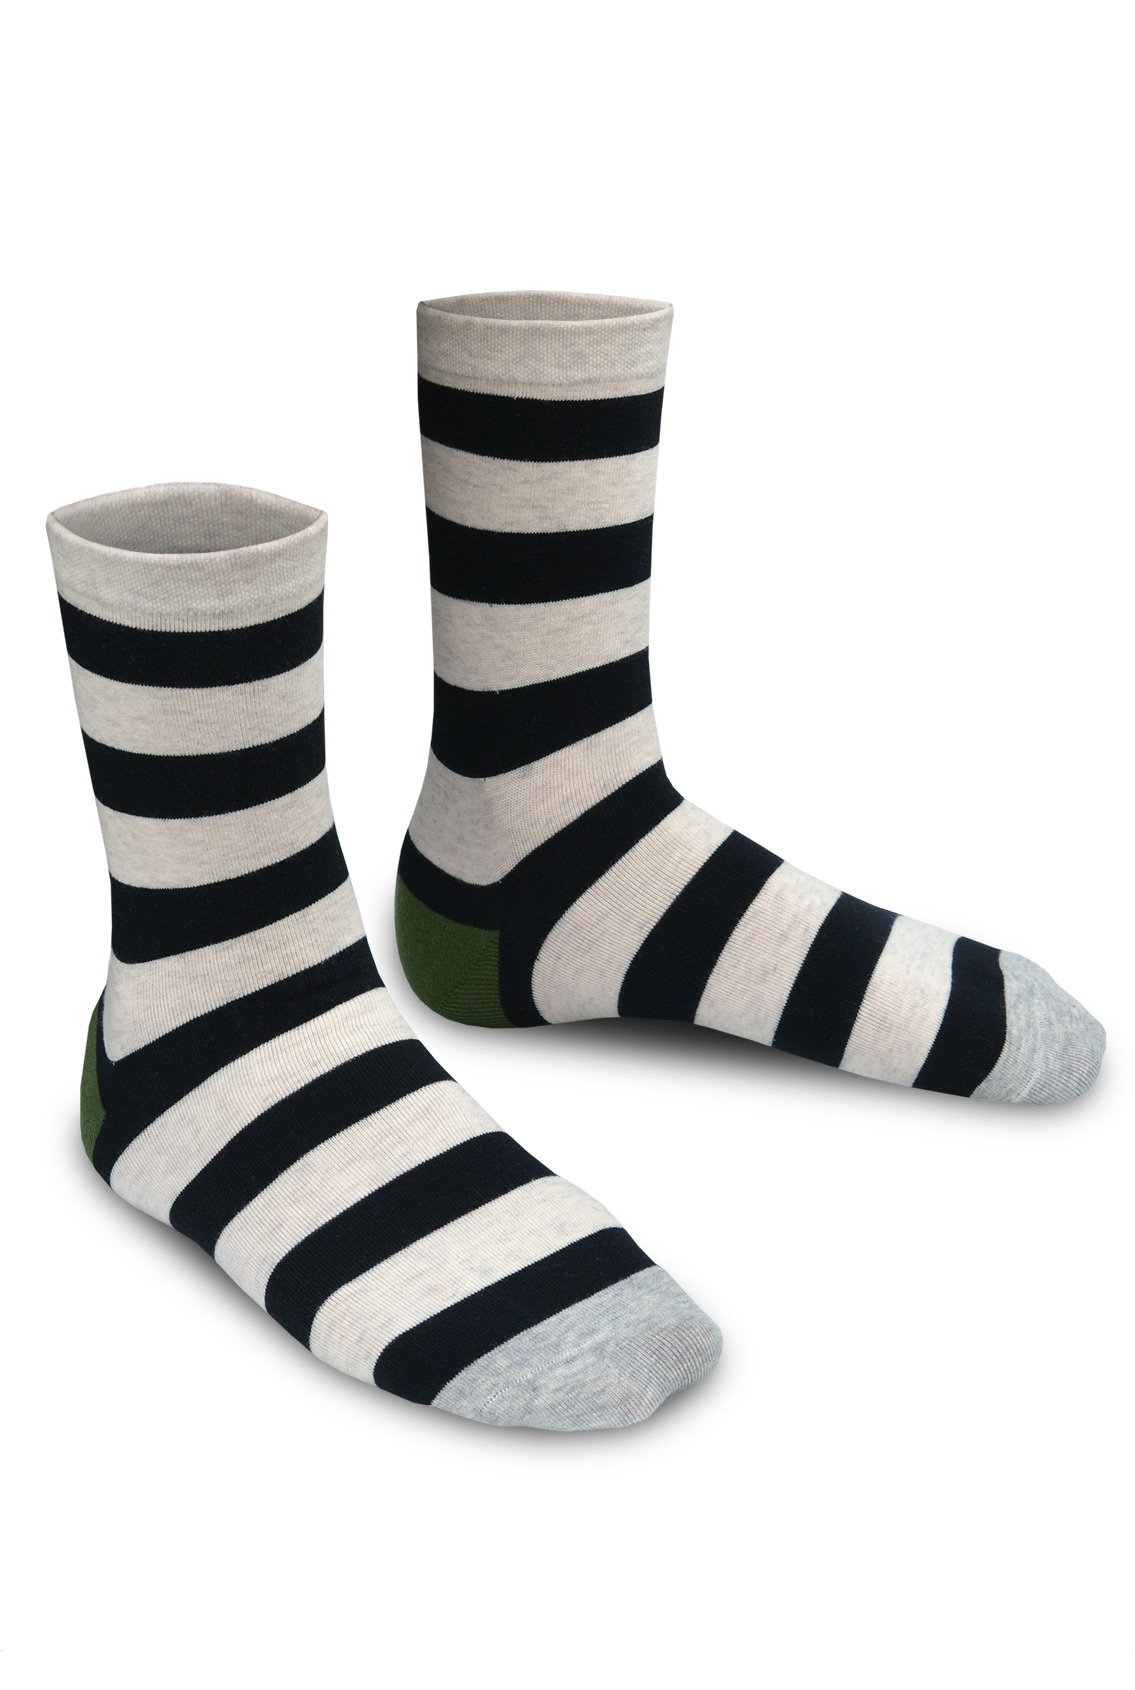 black striped socks with green heel